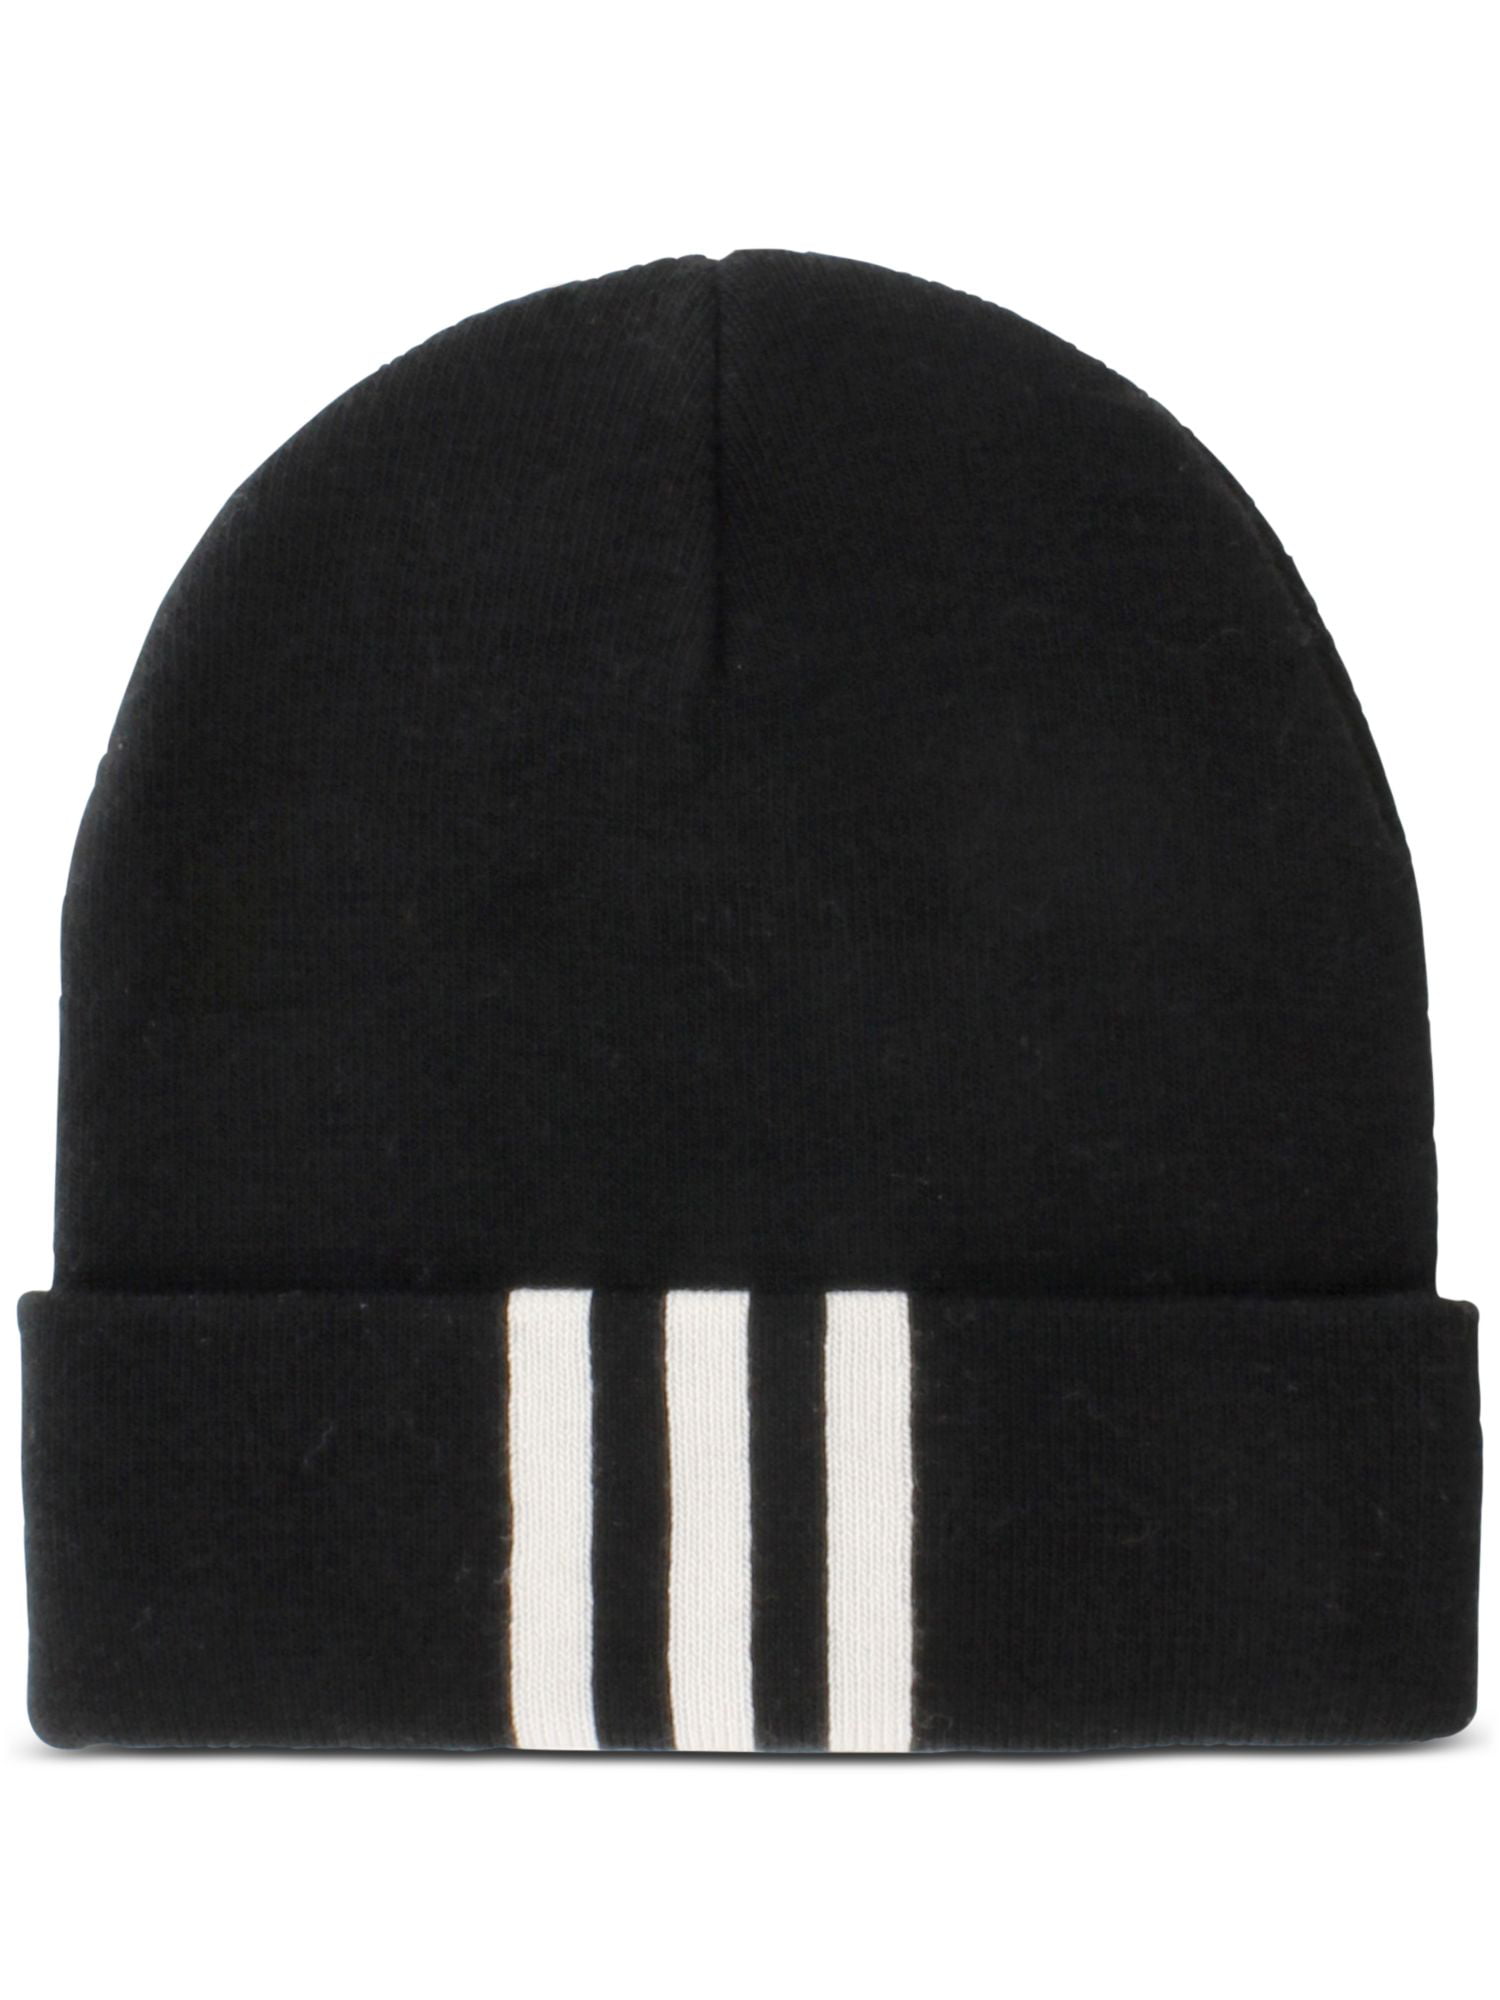 Fold-Up Elastic Amplifier Ribbed Mens Hat Cuff Cap Black Beanie ADIDAS Logo